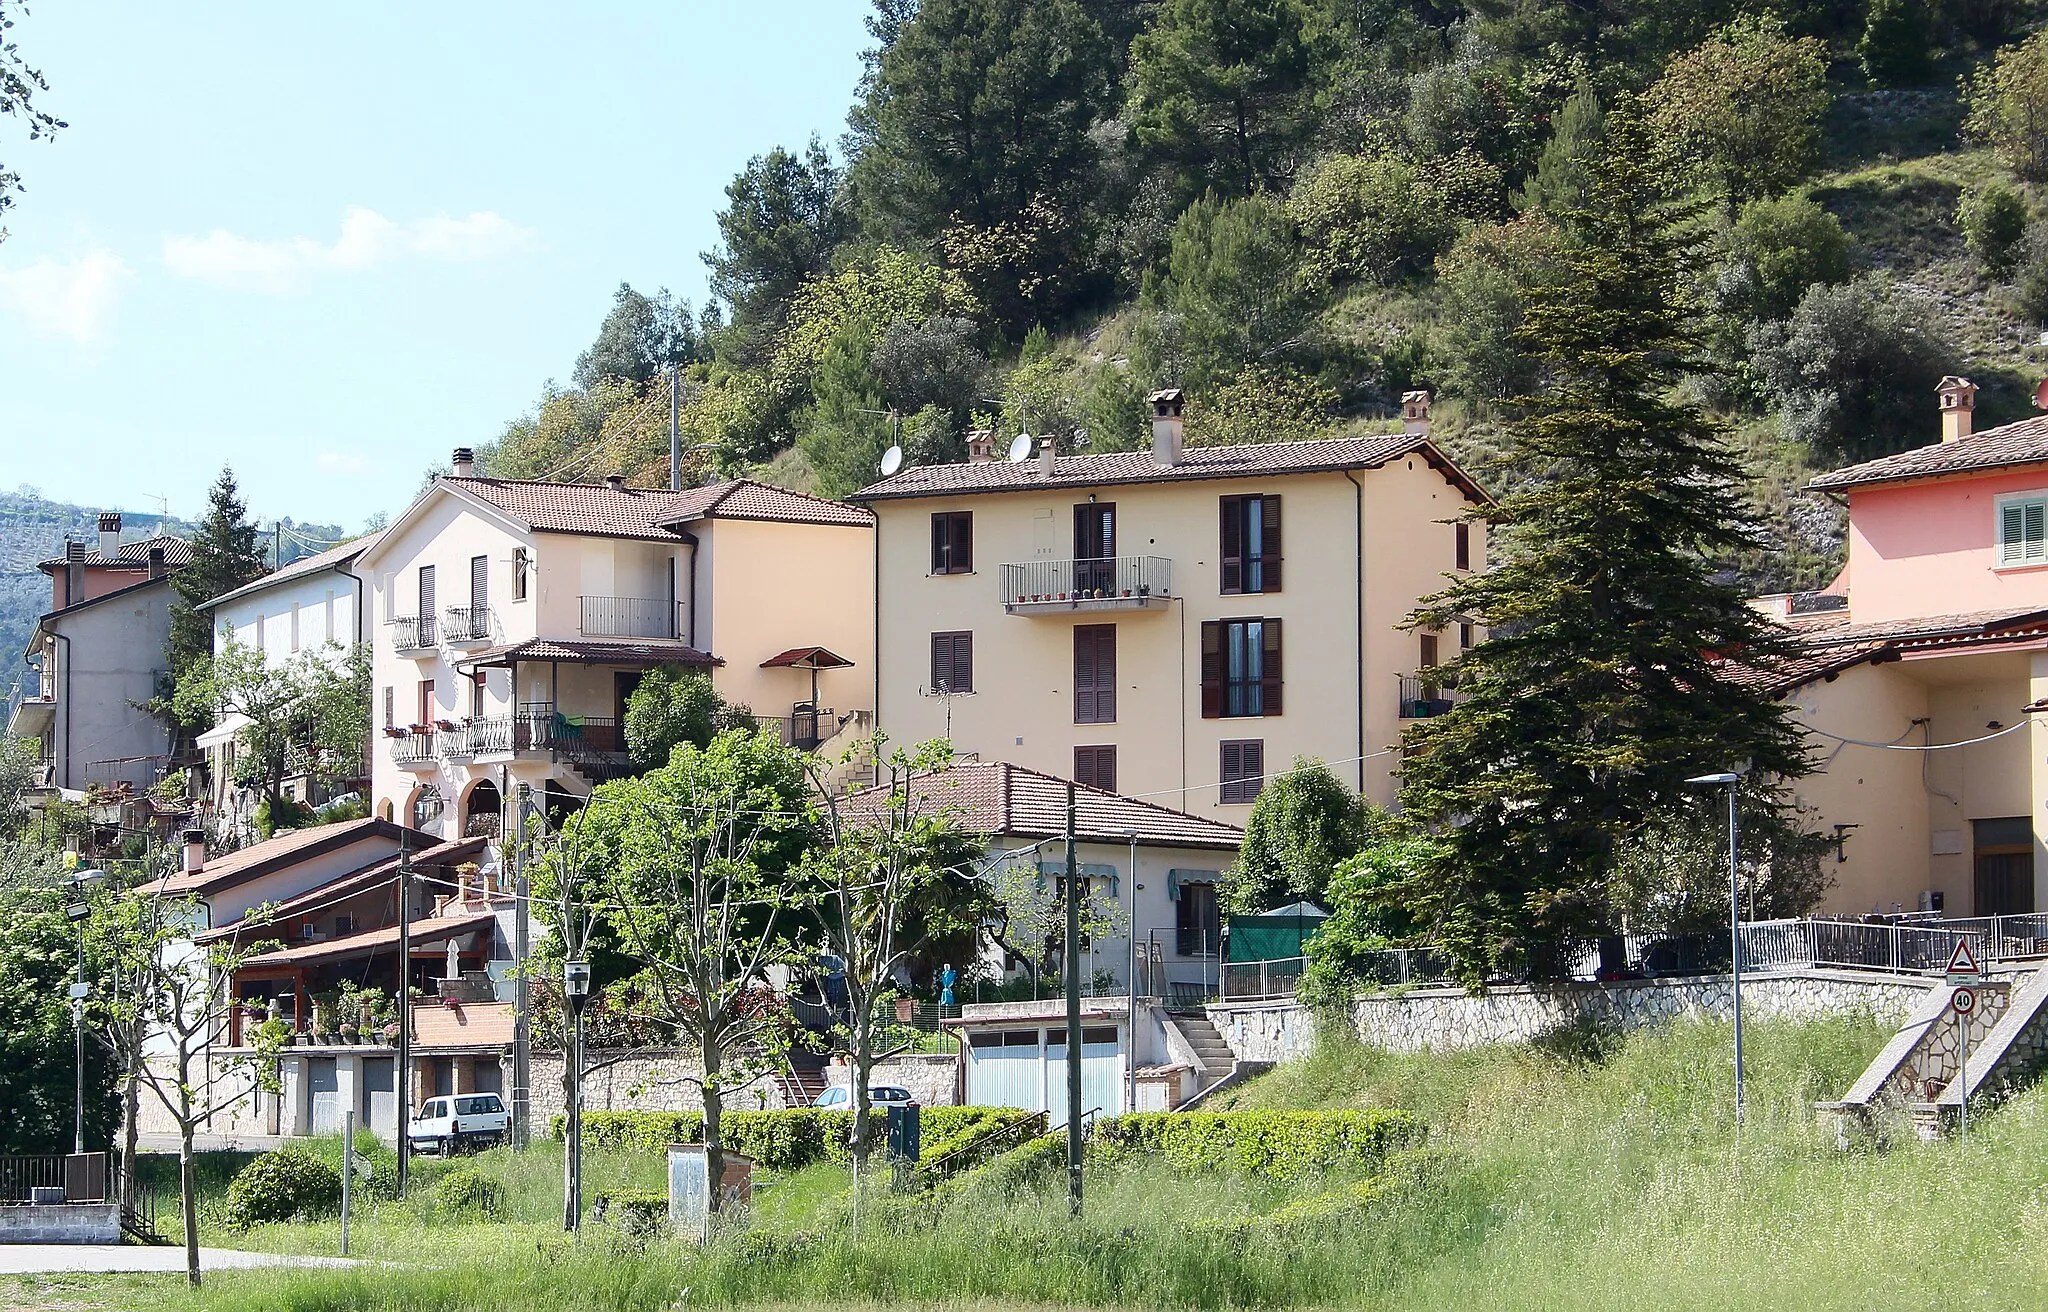 Photo showing: Fontechiaruccia, hamlet of Montefranco, Province of Terni, Umbria, italy